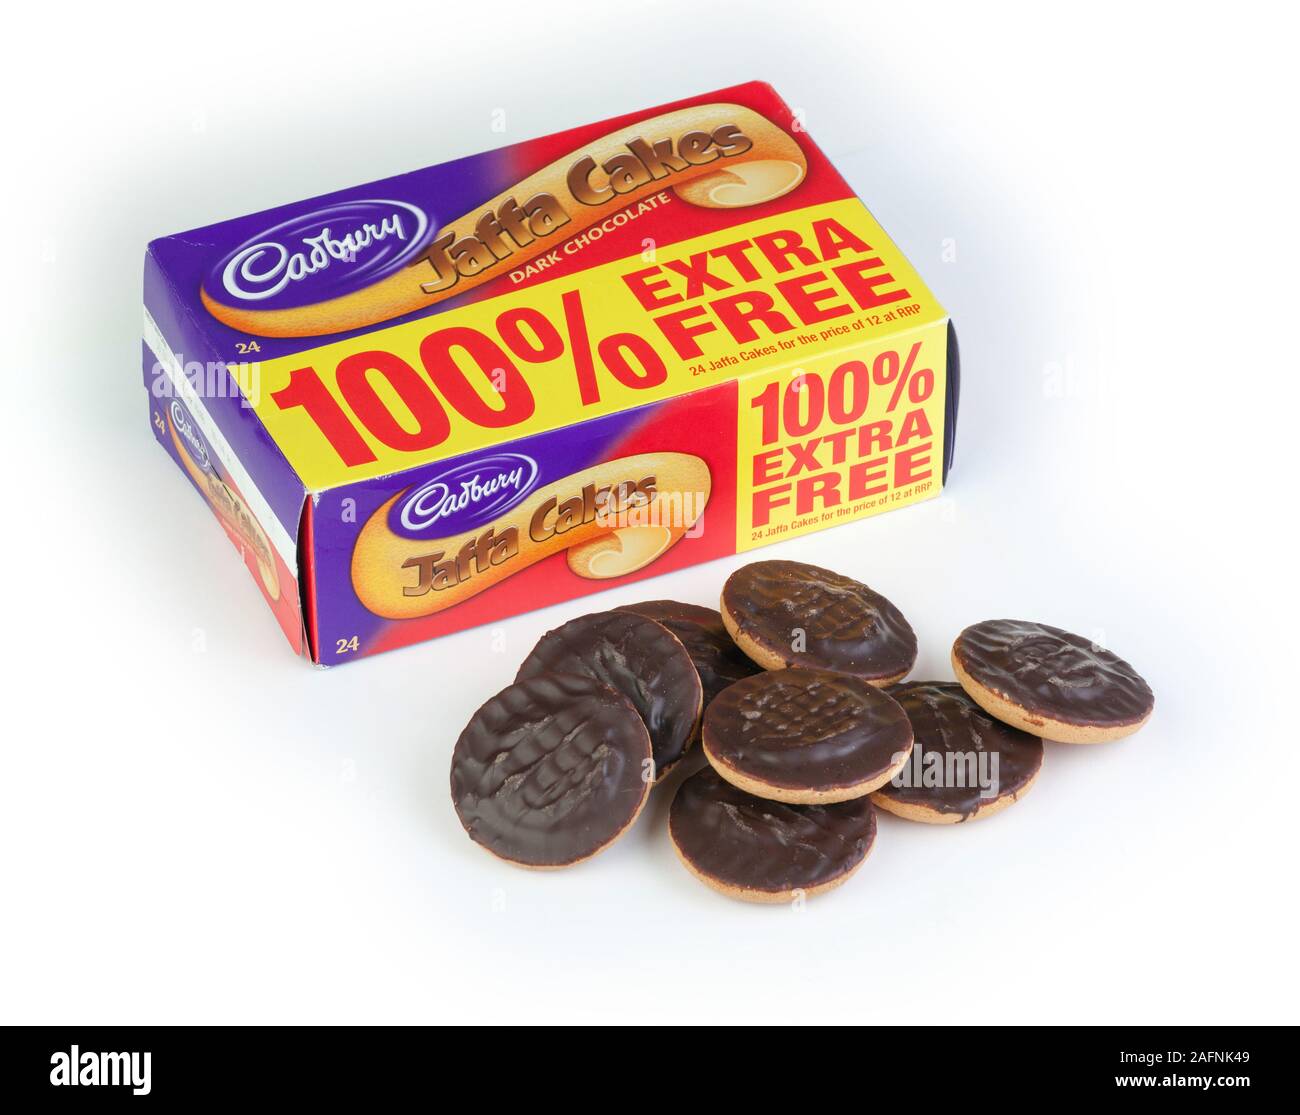 Cadbury jaffa cakes, with 100% free extra promotion Stock Photo